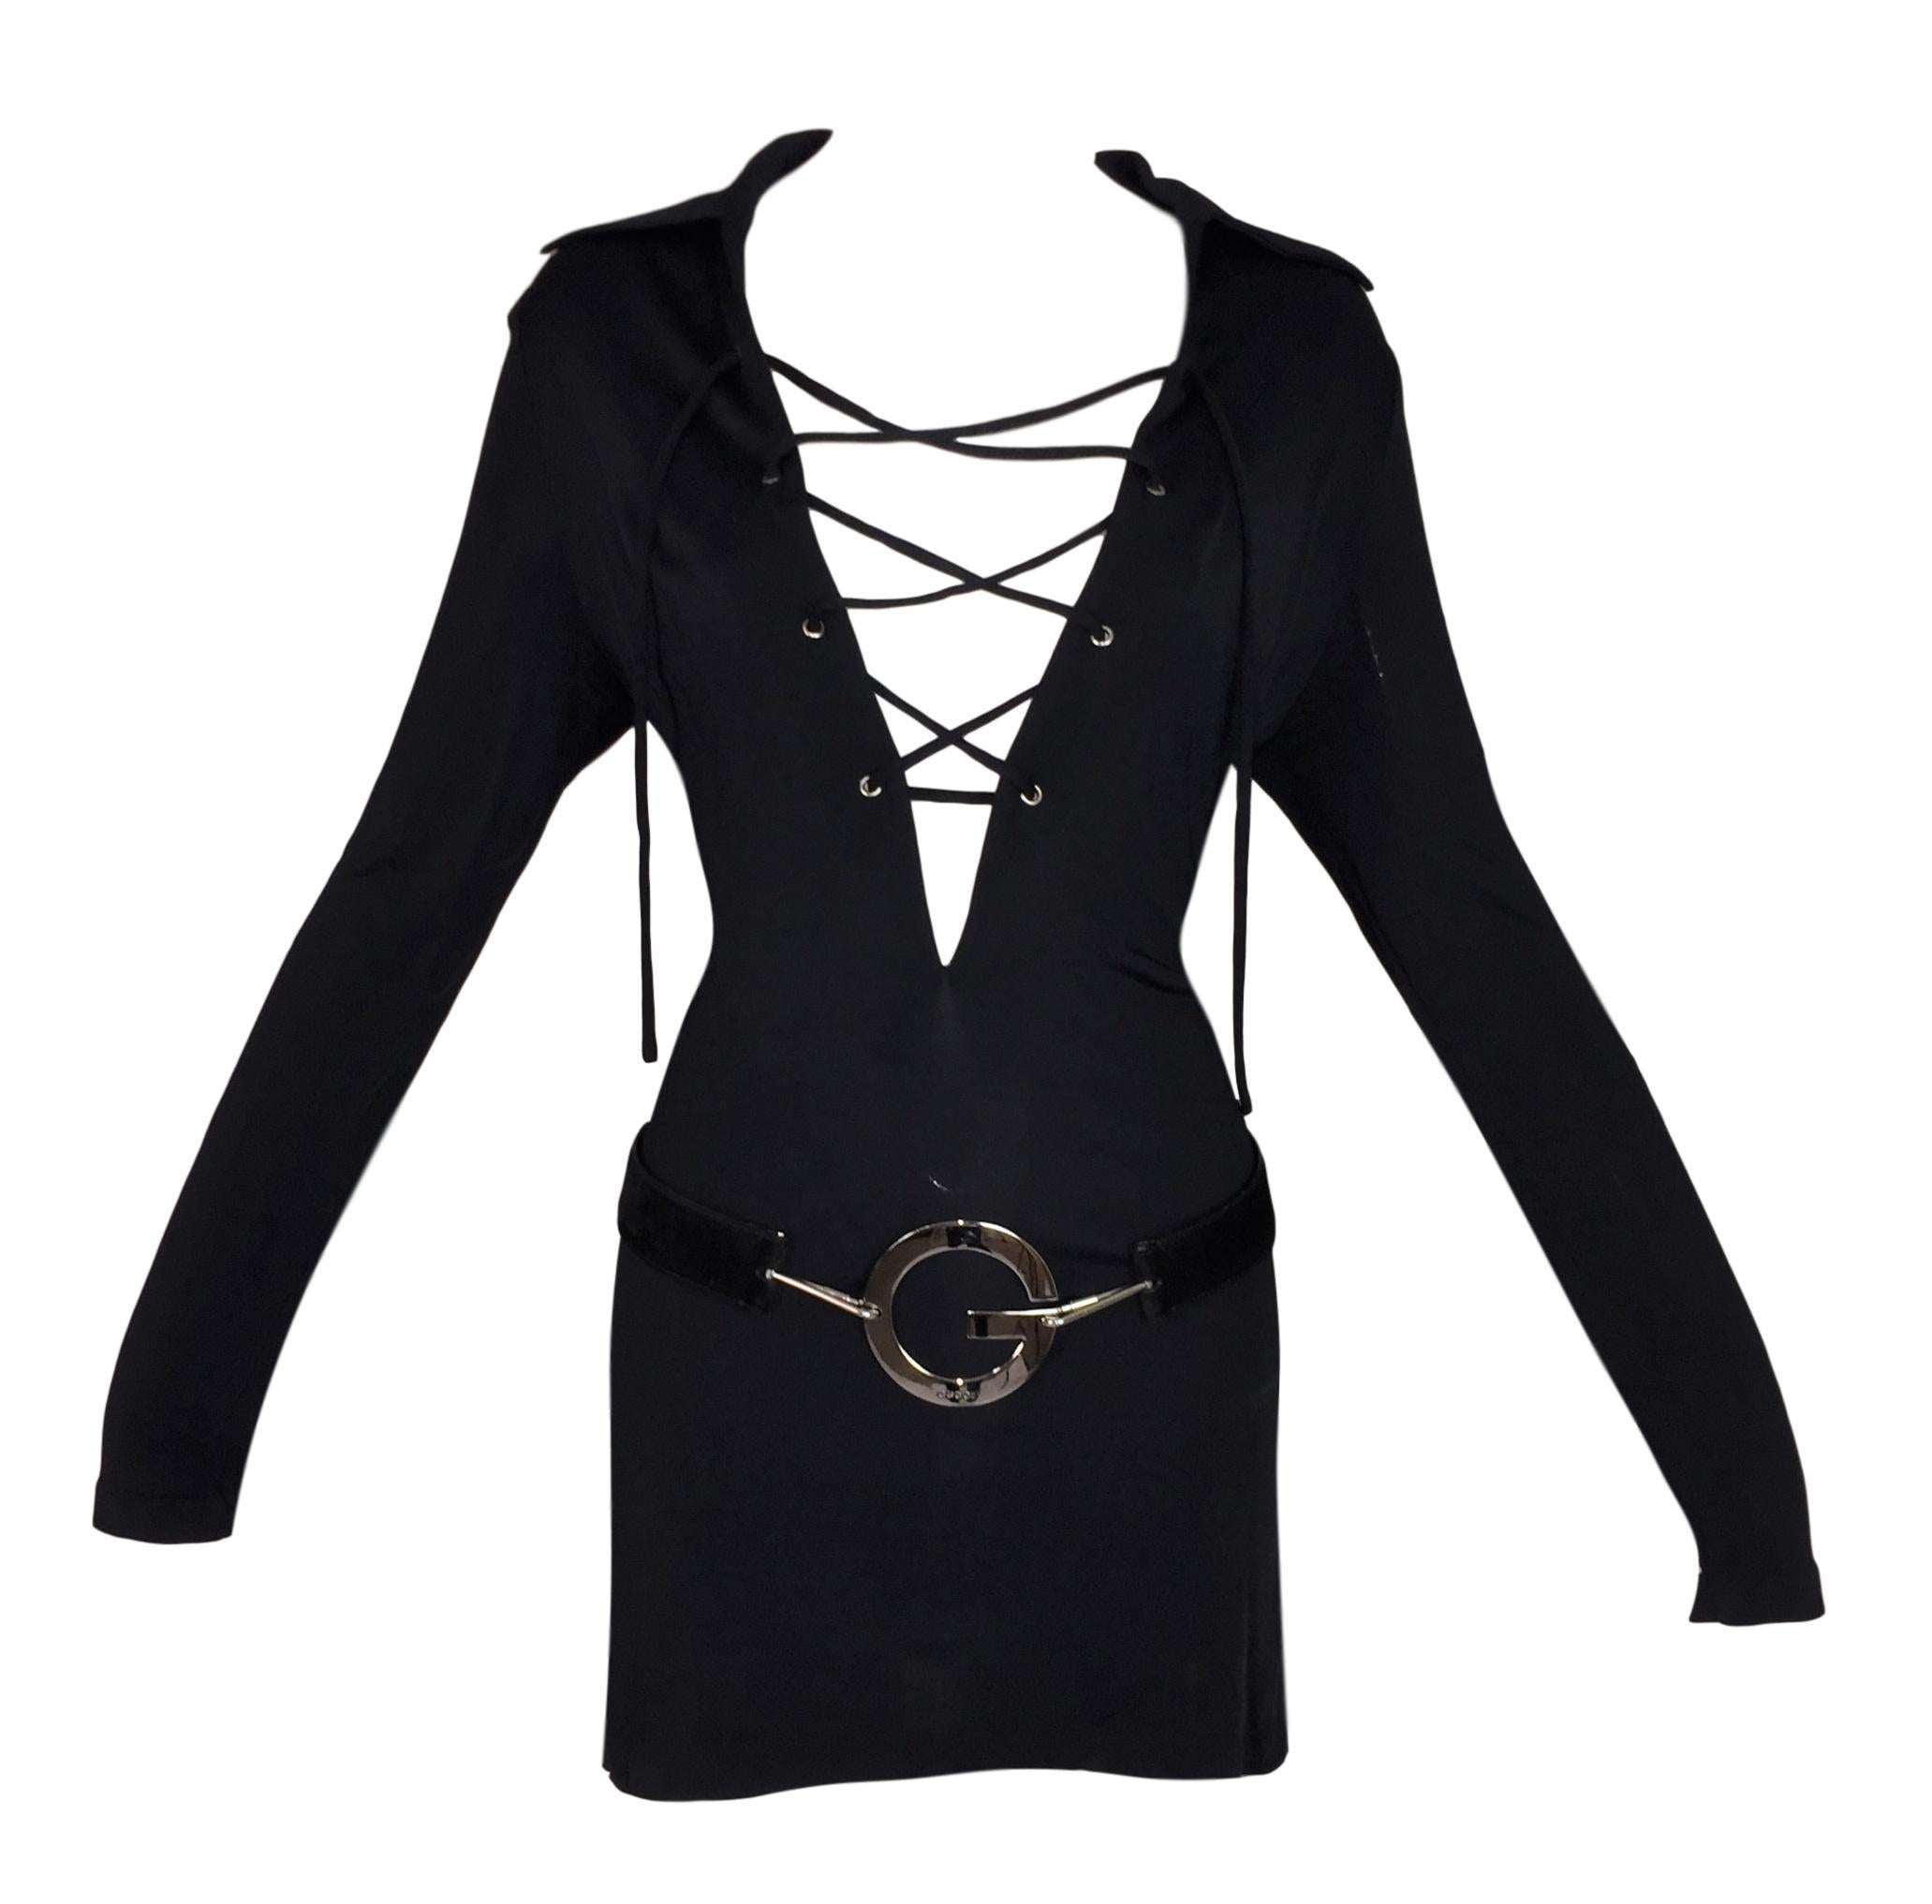 S/S 1996 Gucci Tom Ford Documented Black Plunging Mini Dress W/ Logo Belt